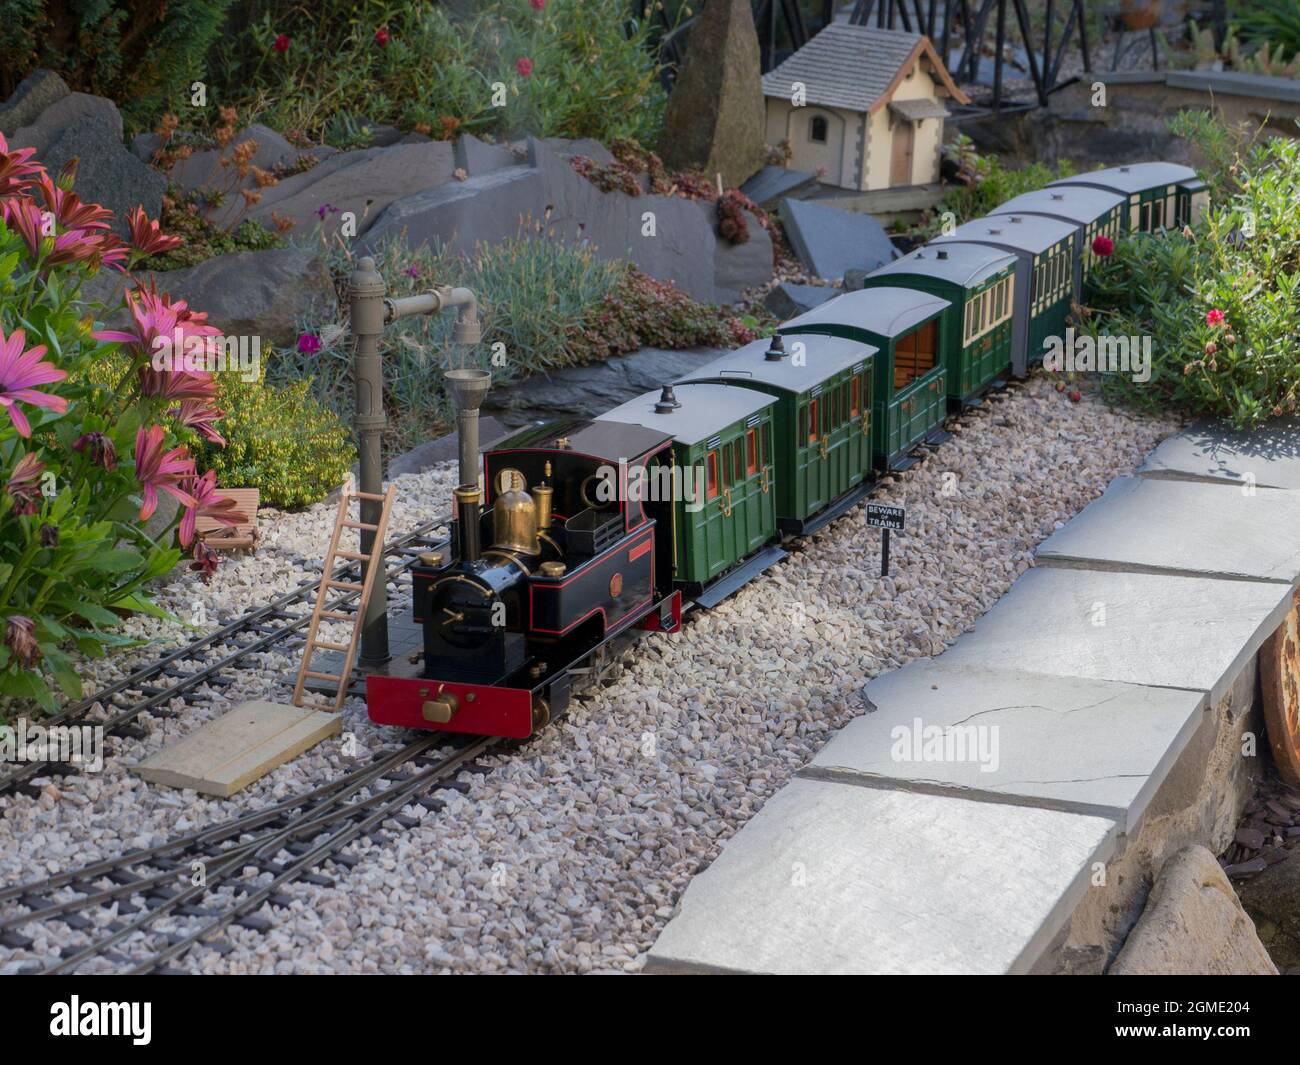 Garden Model Railway locomotive with carriages Stock Photo